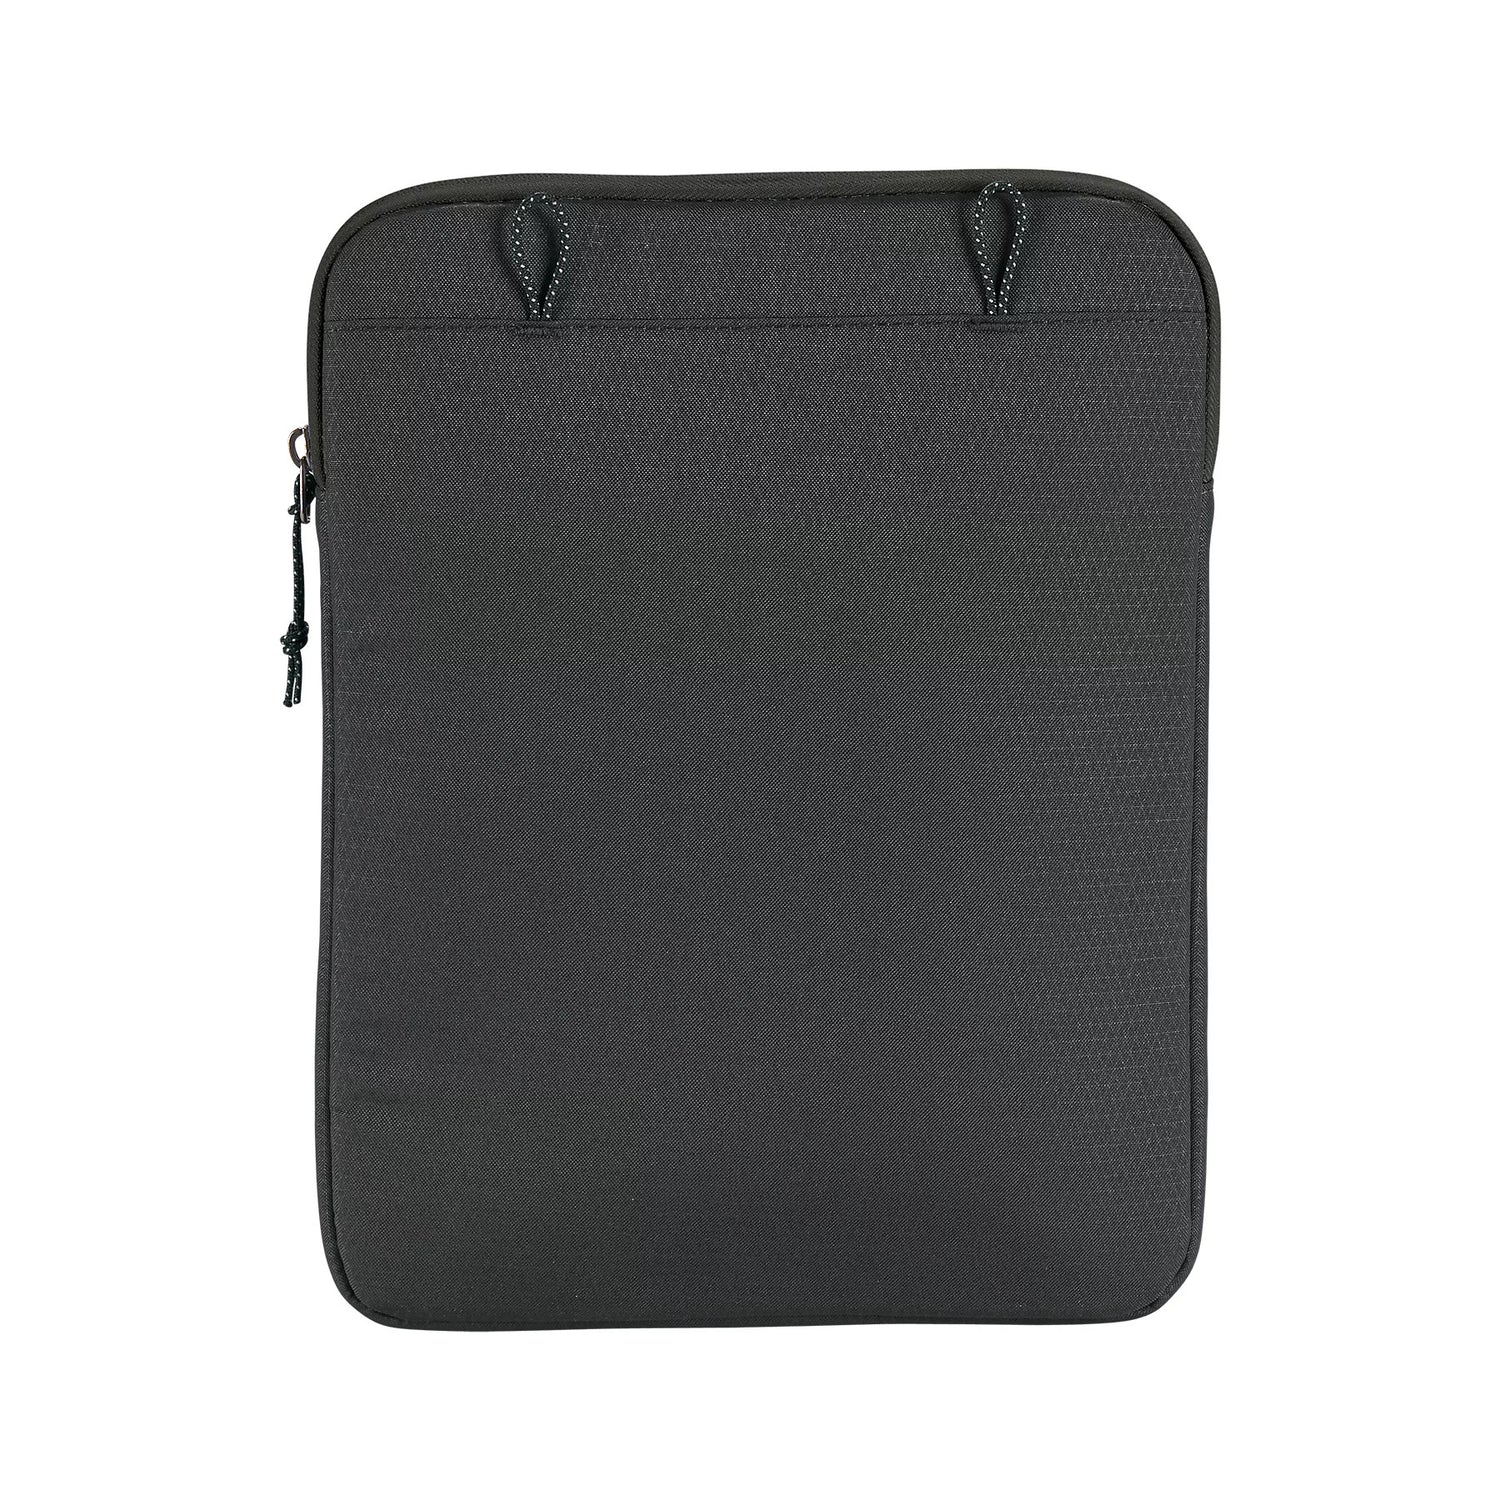 Best Macbook Pro laptop case? Sleeve vs case vs bag - budget vs premium -  YouTube